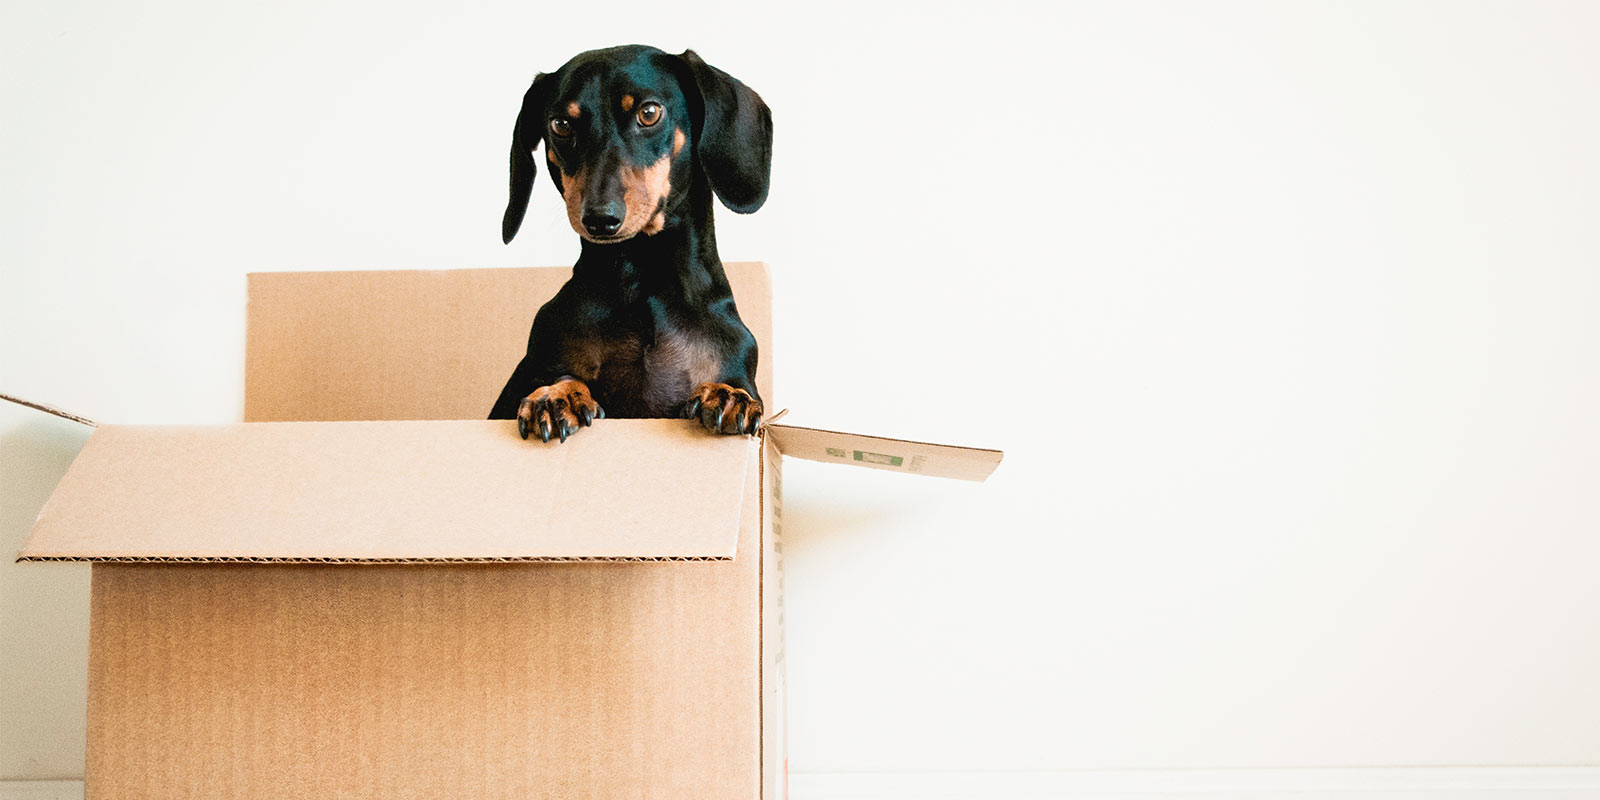 dog in a box preparing to move